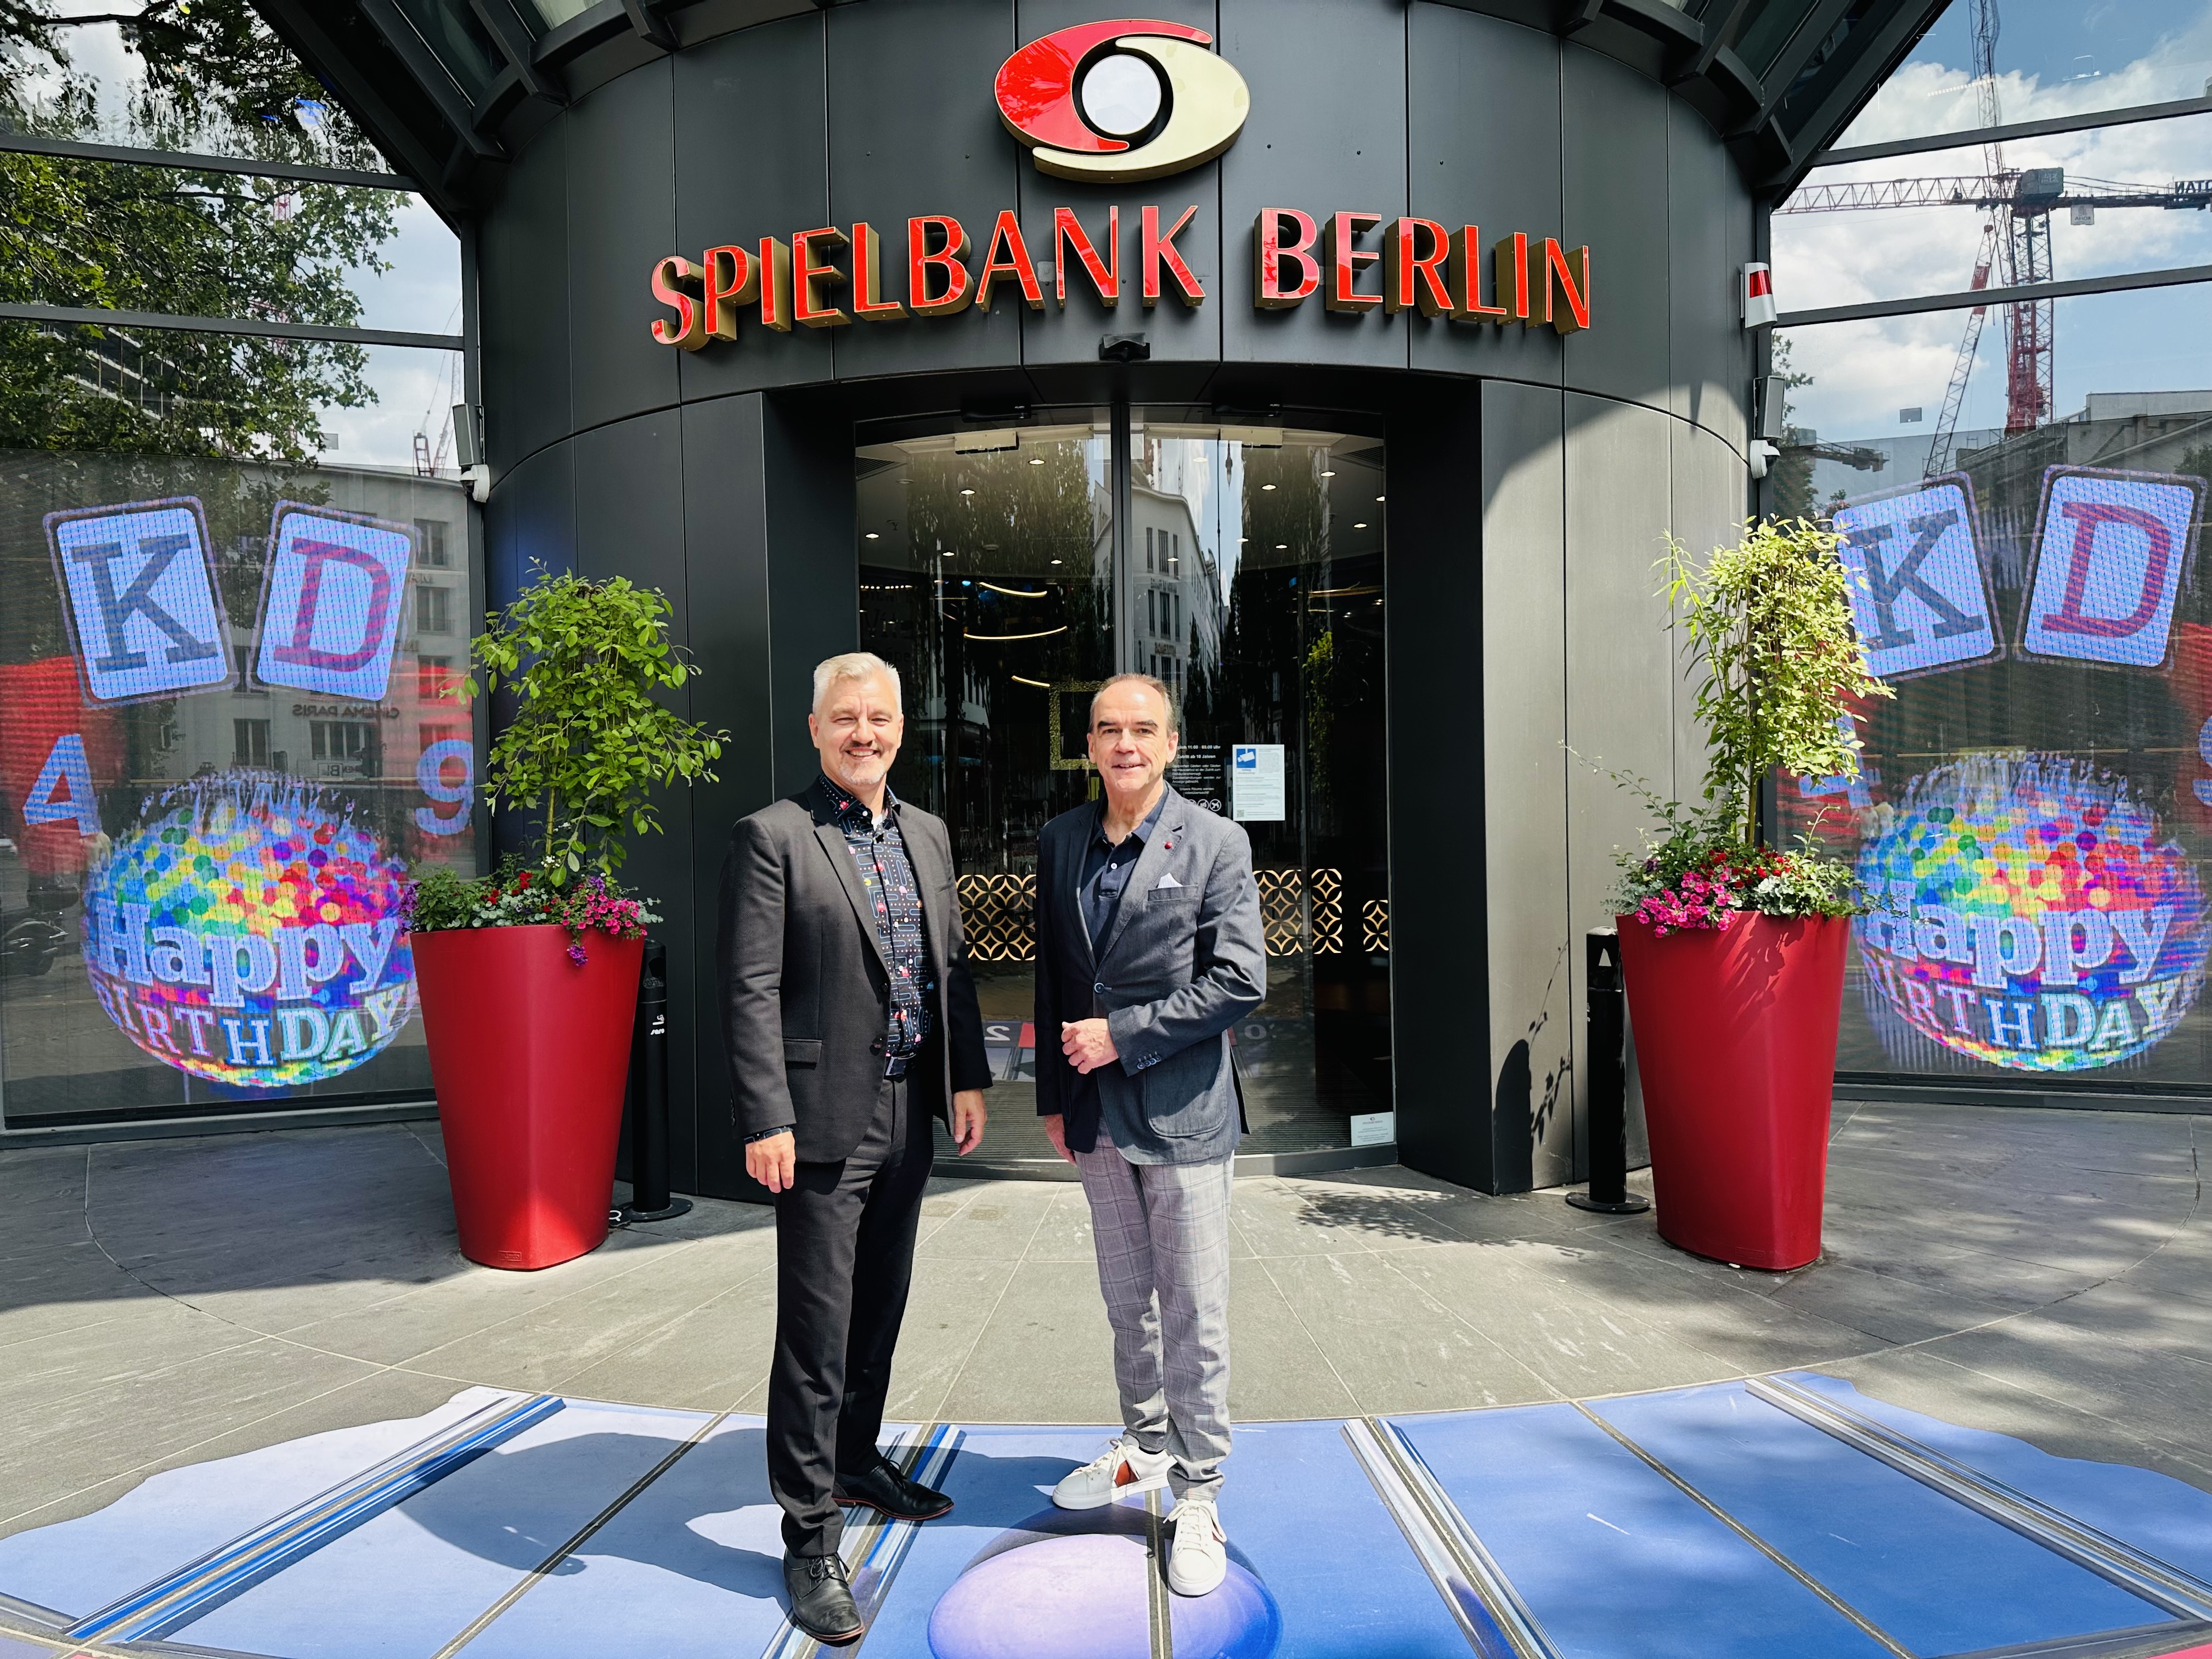 Zum Glück in der City: Spielbank Berlin feiert zweijähriges Jubiläum am Standort Ku'damm